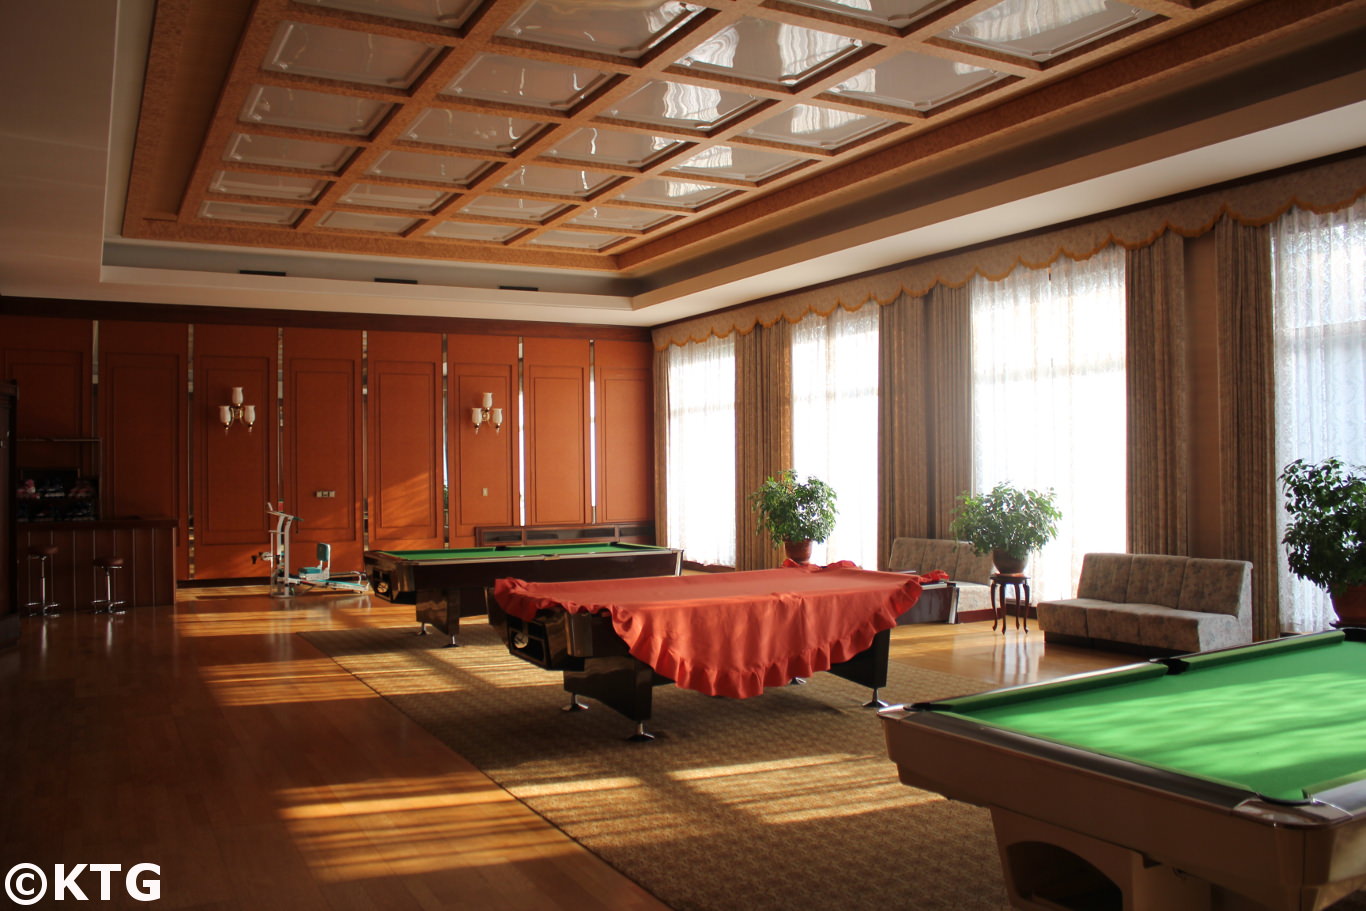 billiards room at the Nampo Spa Hotel in Onchon county near Nampo city, North Korea (DPRK)